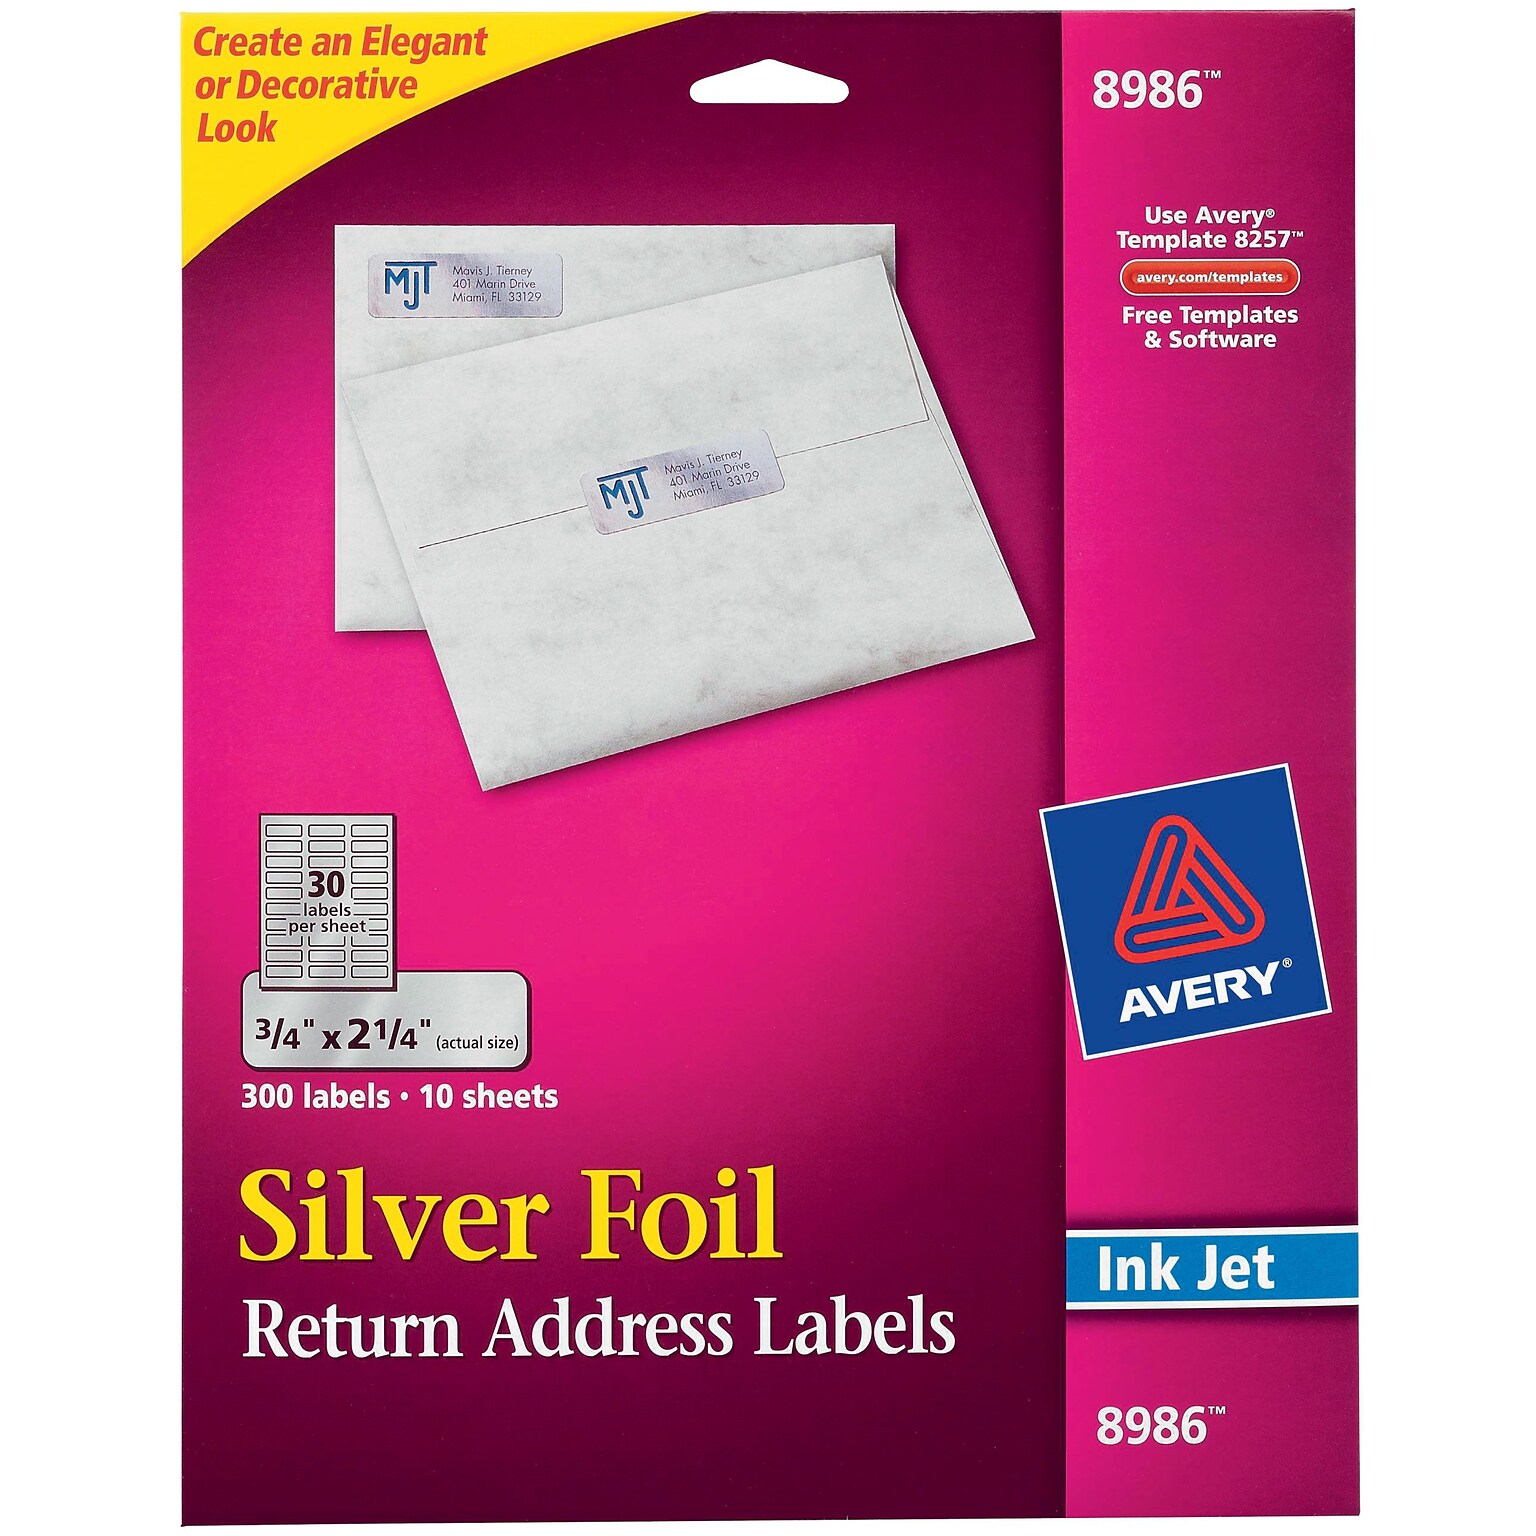 Avery Inkjet Foil Mailing Labels, Silver, 3/4 x 2-1/4, 30 Labels/Sheet, 10 Sheets/Pack, 300 Labels/Pack (8986)